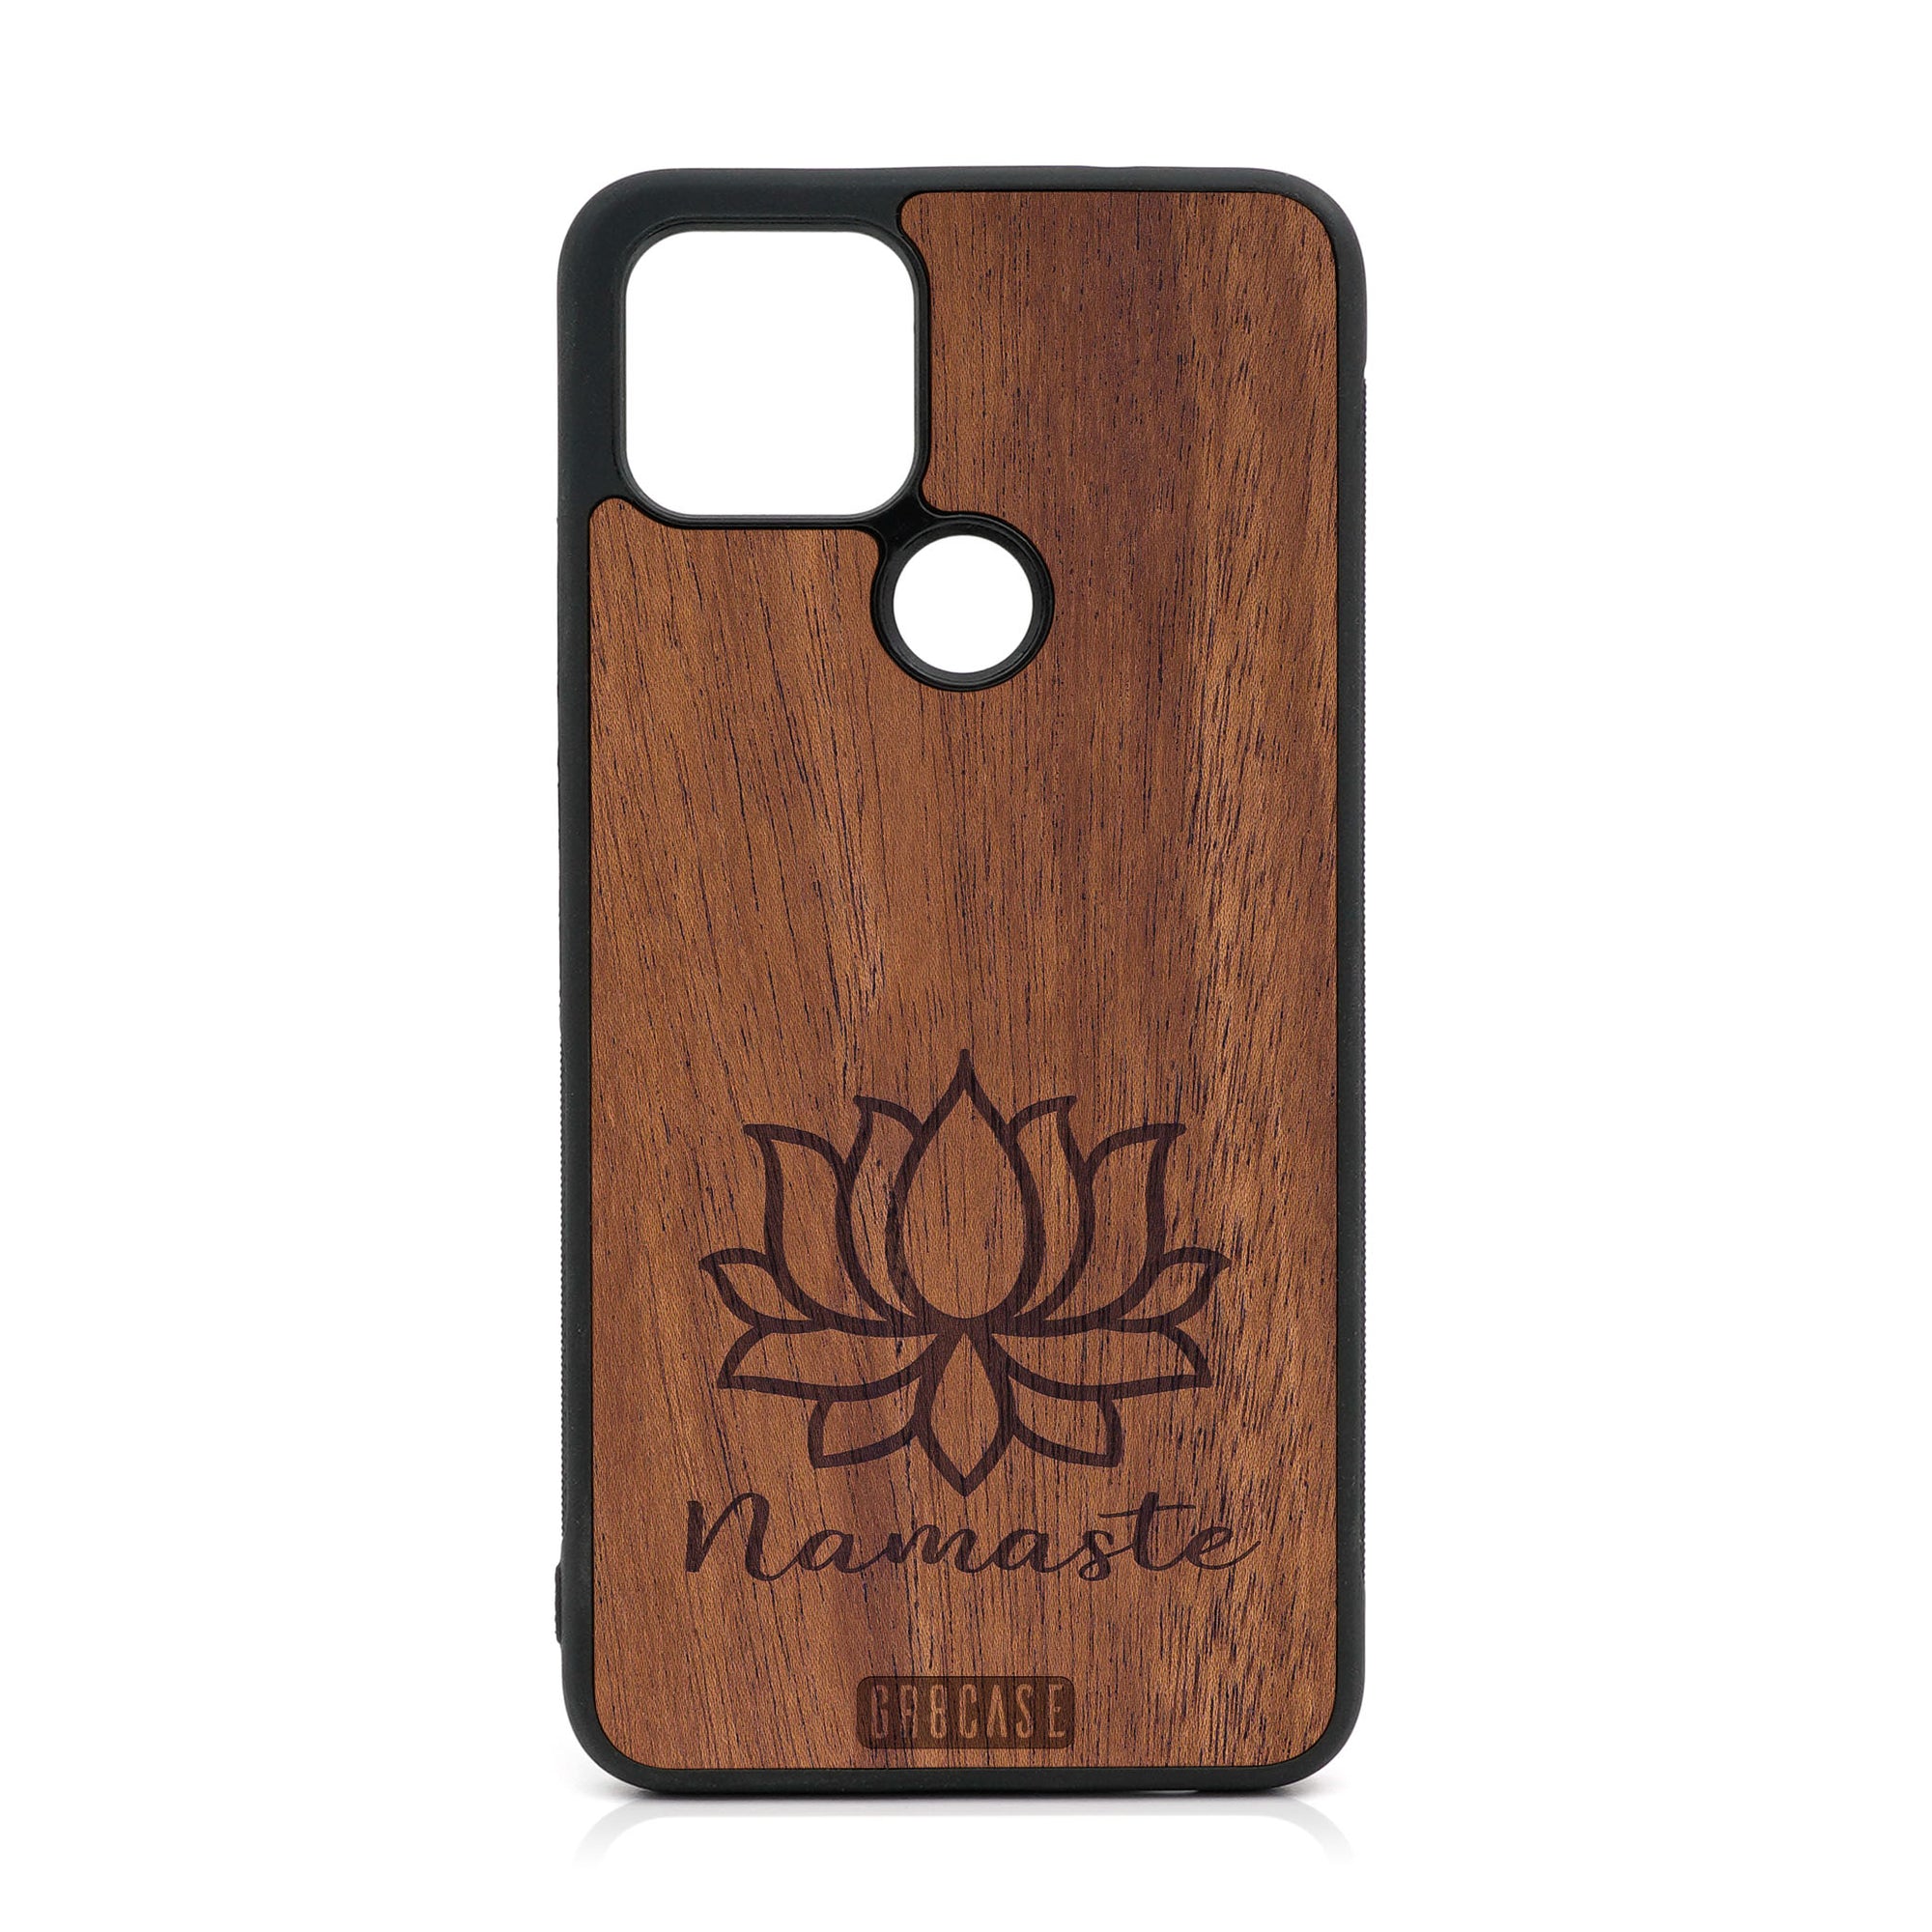 Namaste (Lotus Flower) Design Wood Case For Google Pixel 5 XL/4A 5G